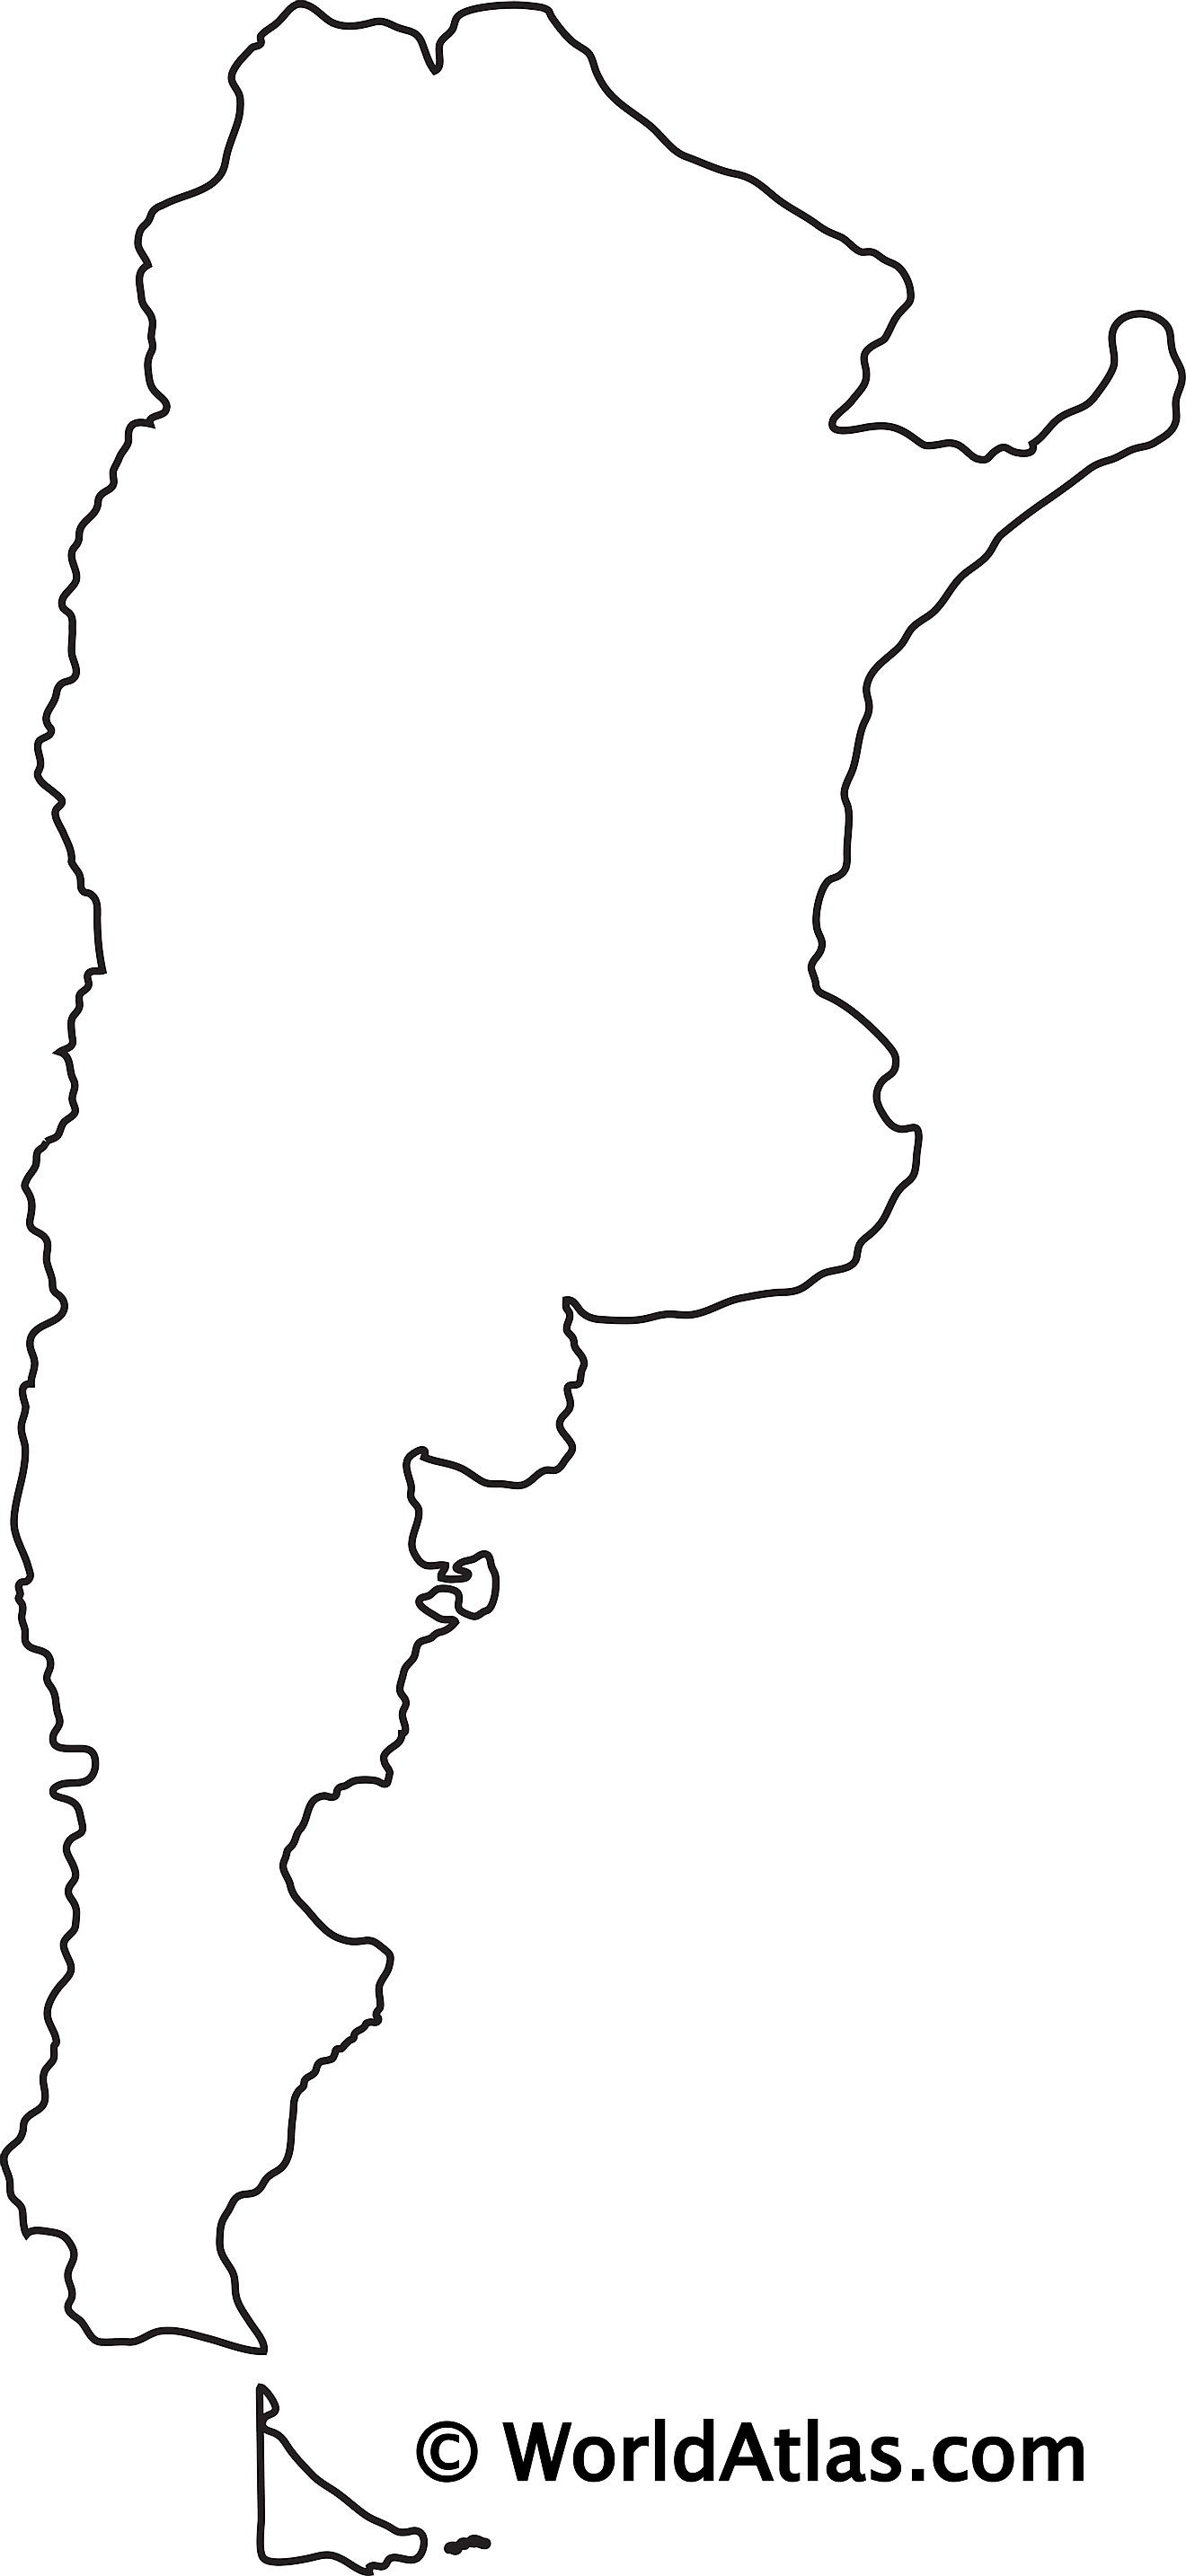 Argentina Maps Facts World Atlas